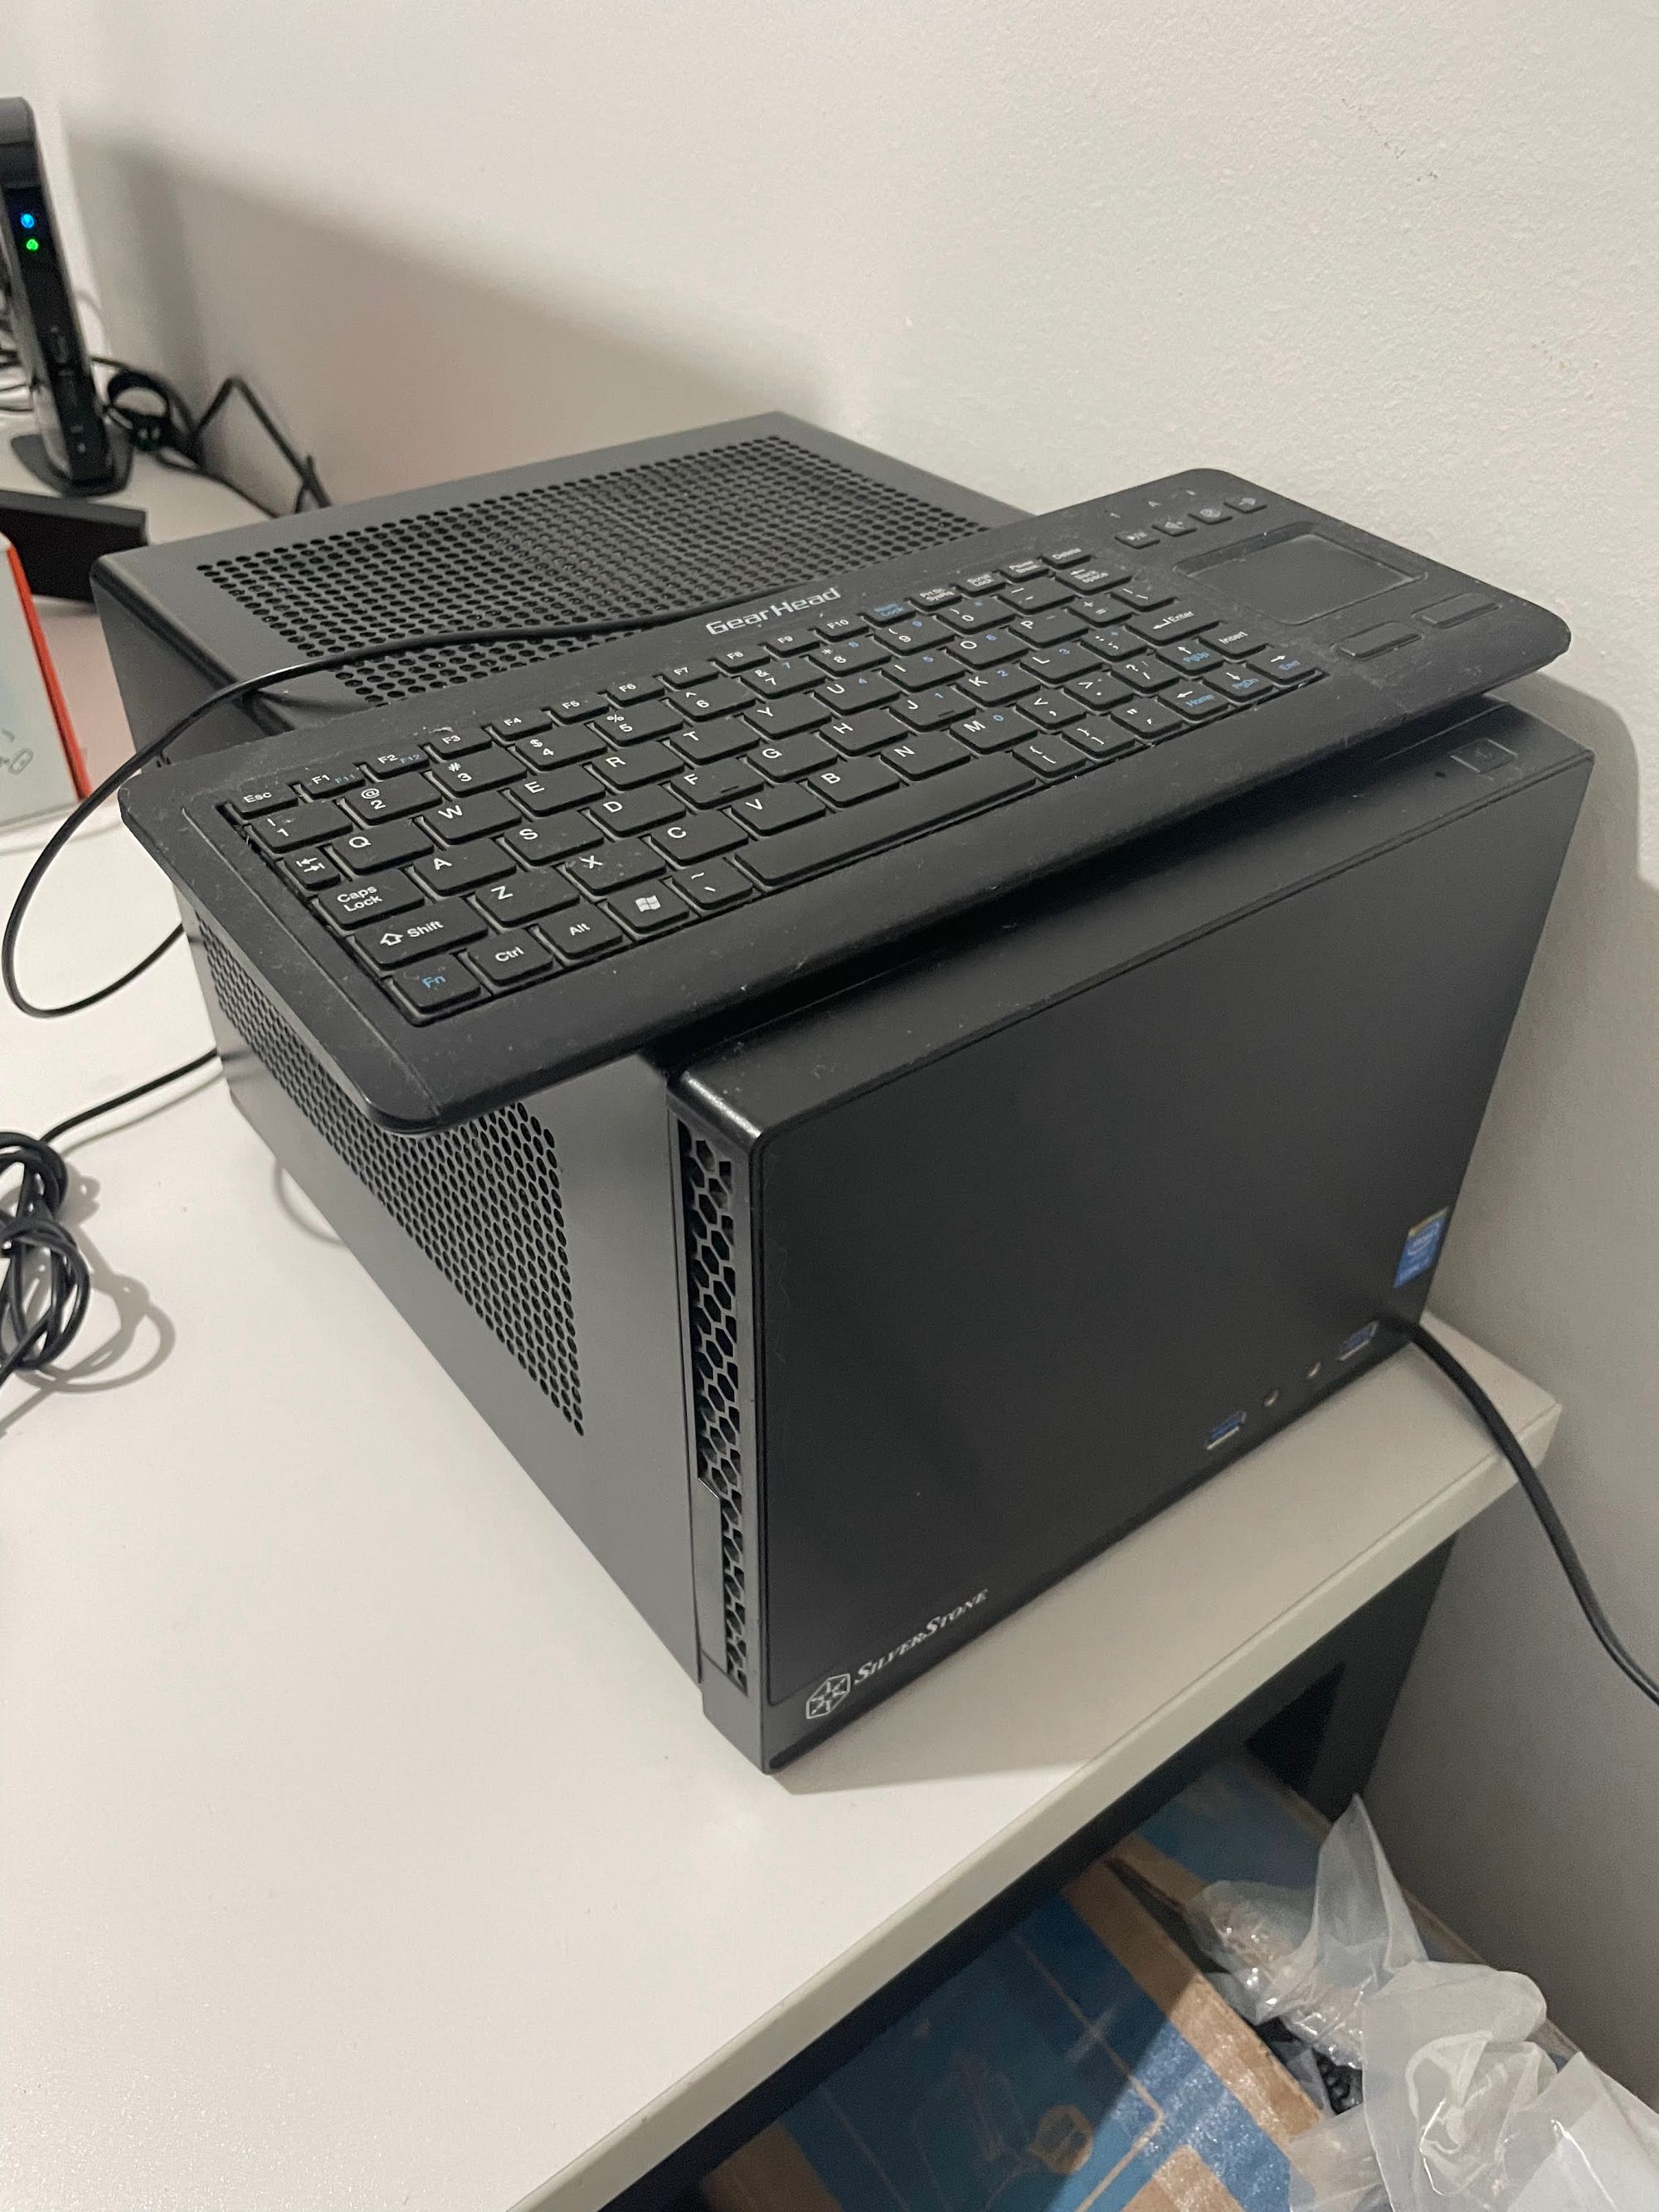 Homelab setup with an old ITX server